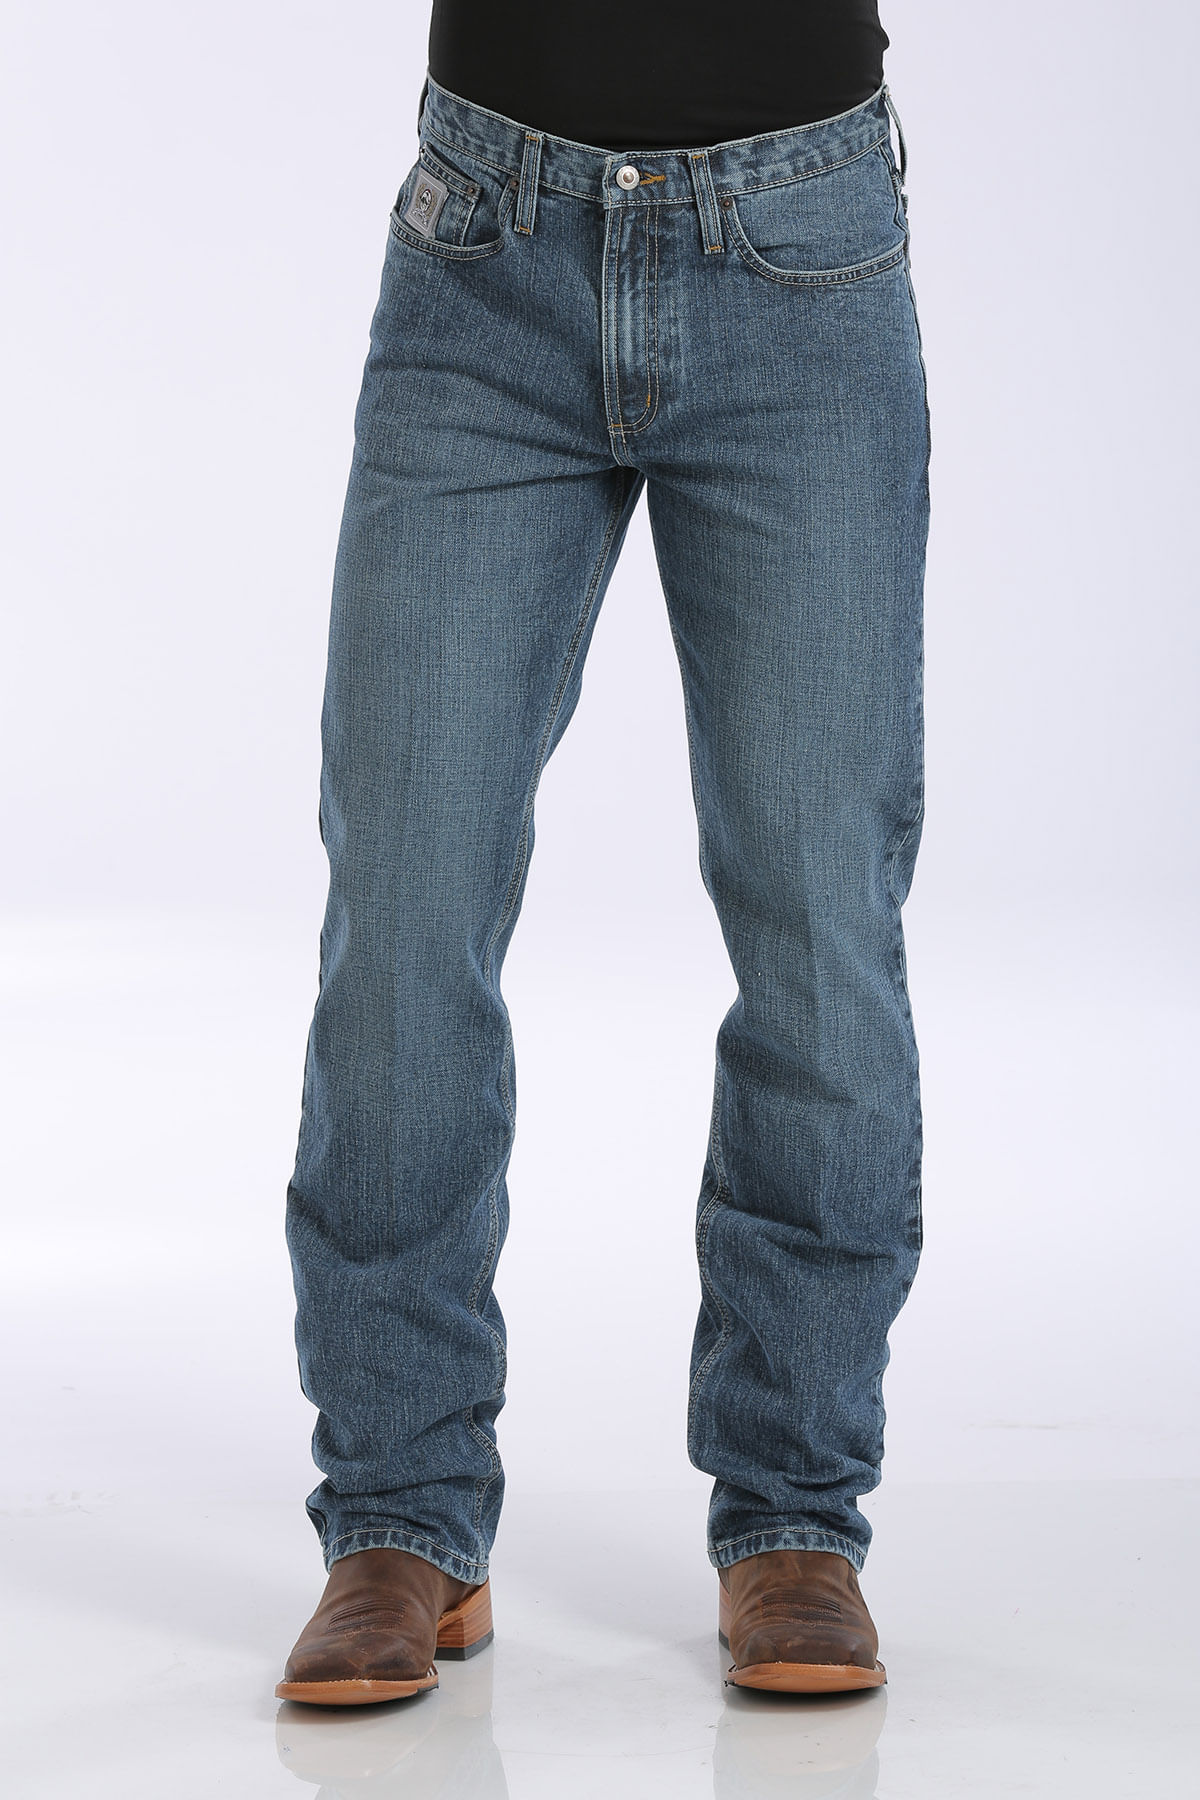 Men-s-Cinch-Silver-Label-Jeans-1527.jpg?v=637268753553370000